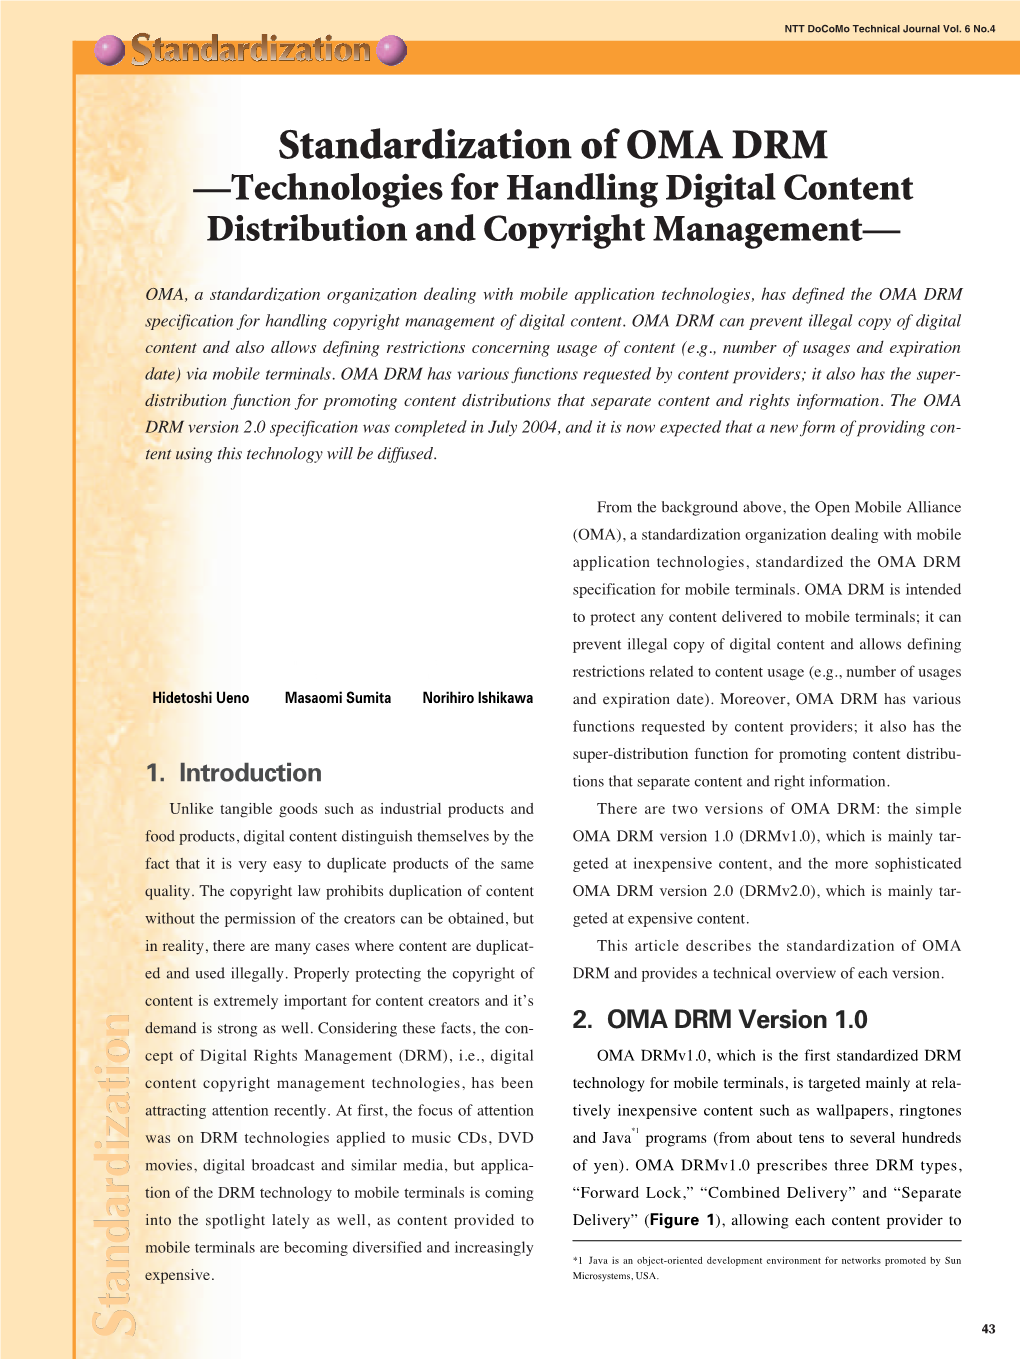 Standardization of OMA DRM -Technologies for Handling Digital